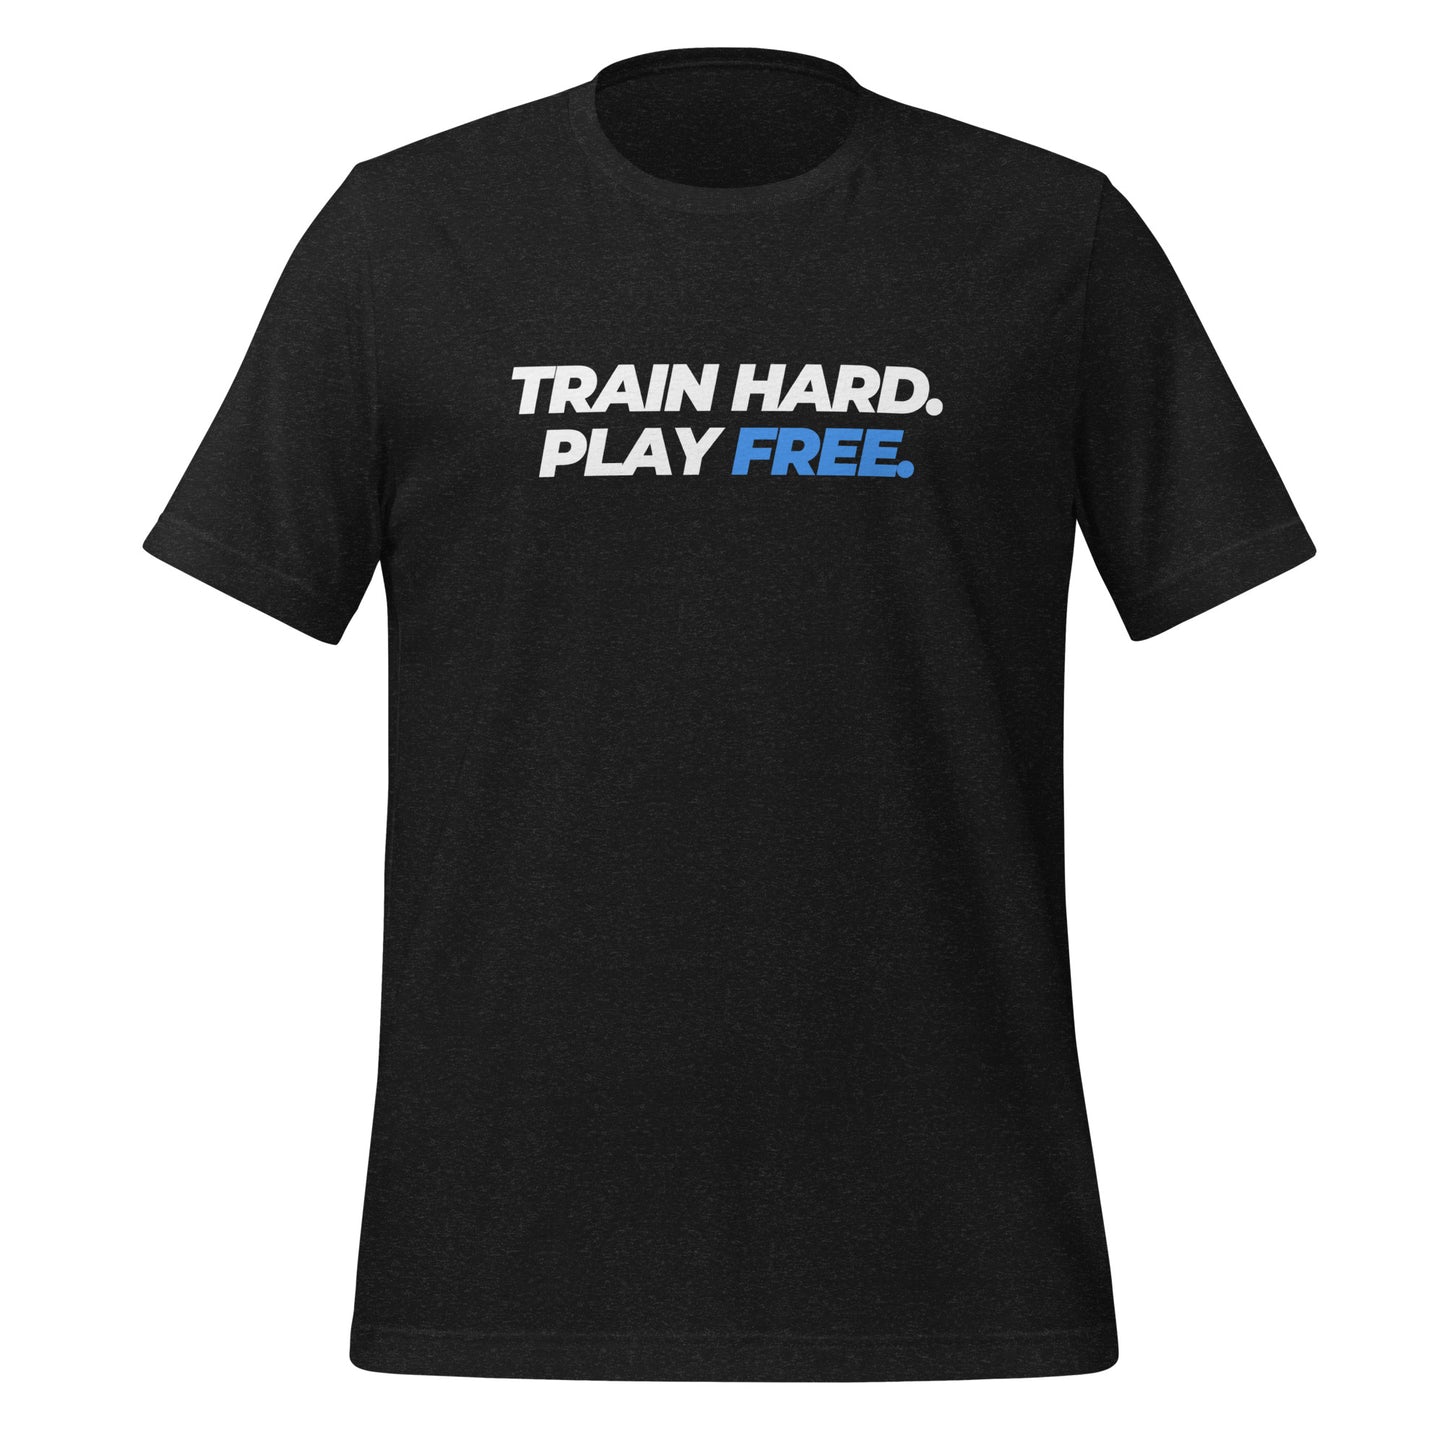 Train Hard. Play Free. - Unisex T-Shirt